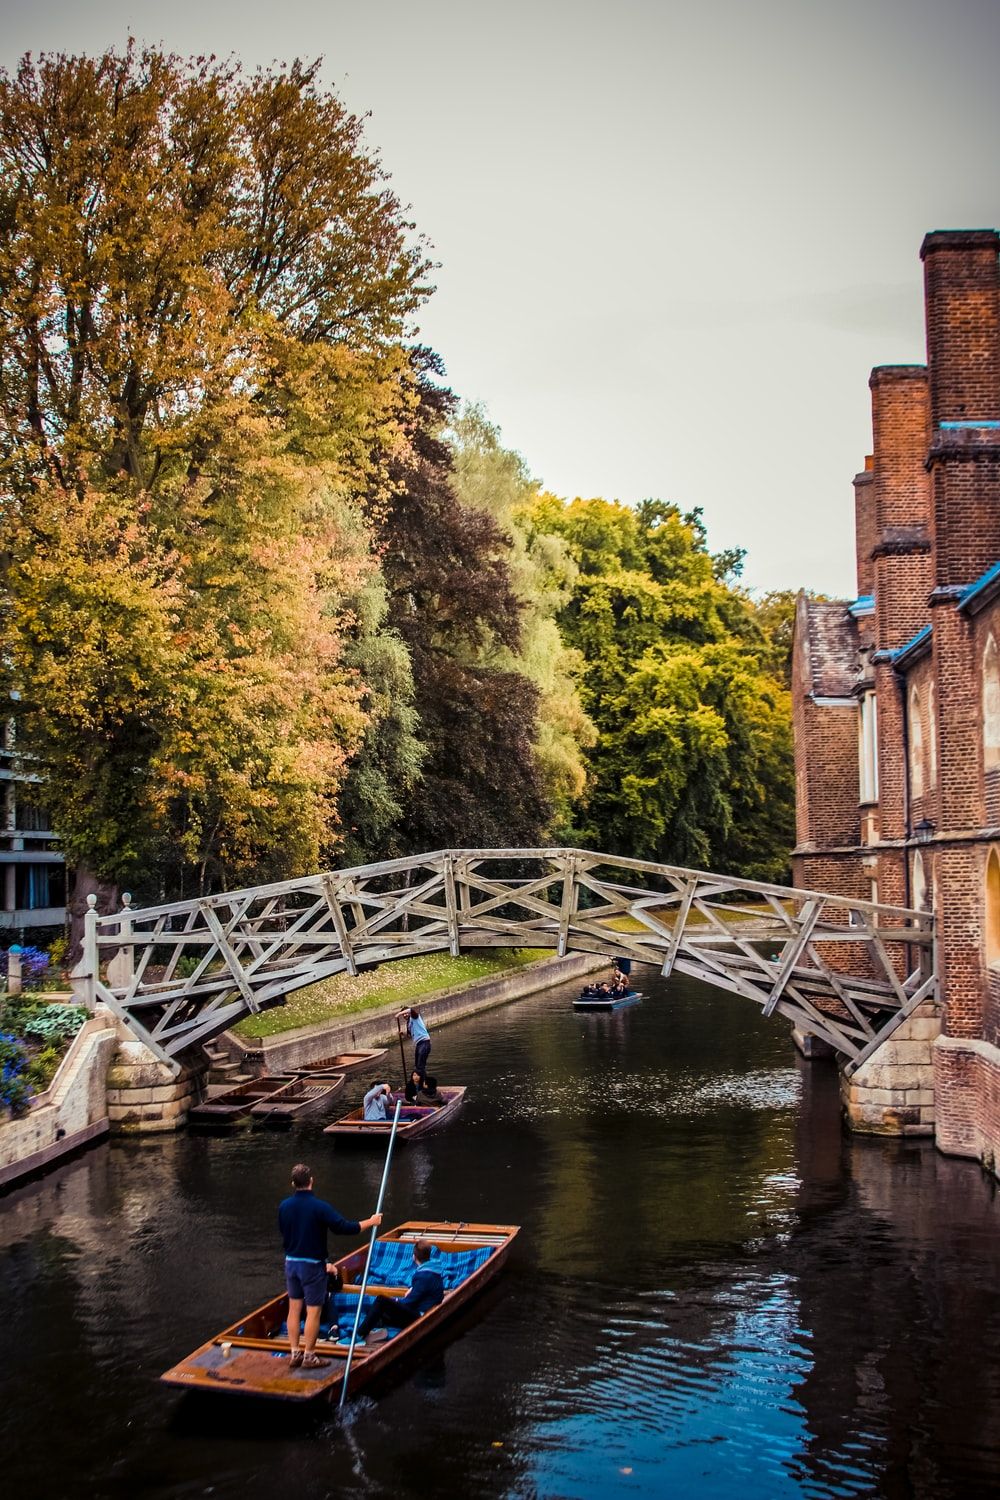 Cambridge Picture. Download Free Image